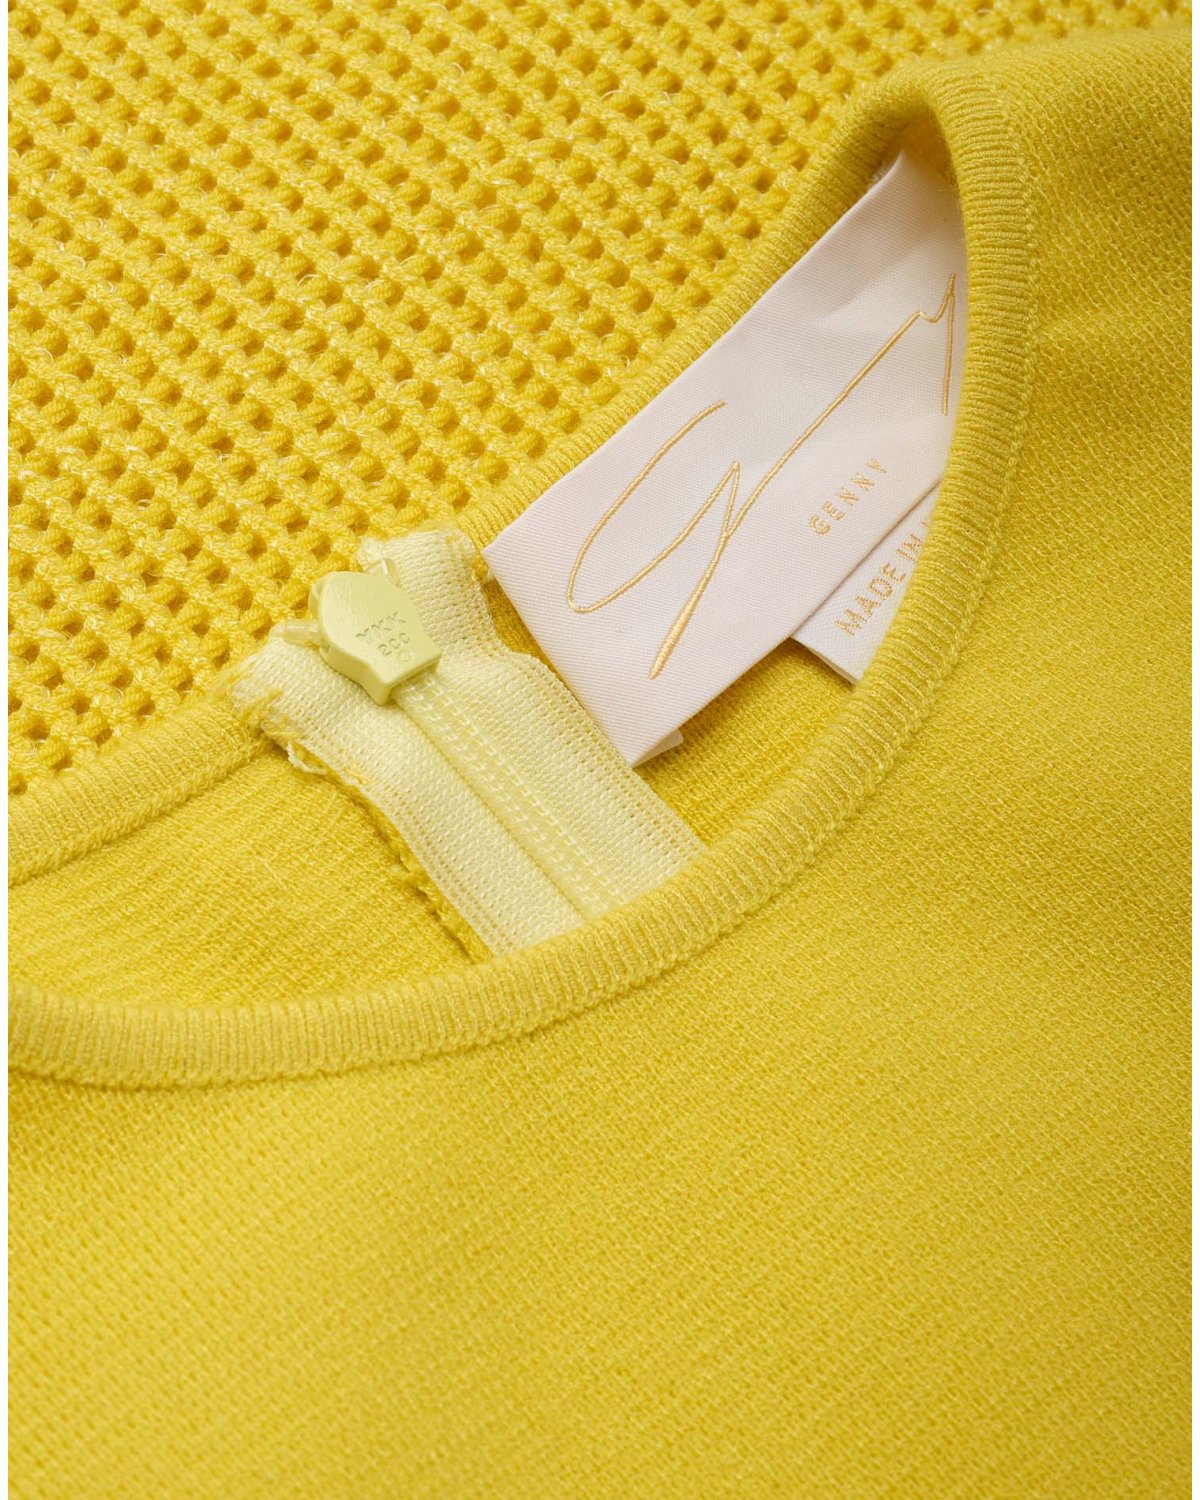 Belted yellow stretch-knit midi dress | Temporary Flash Sale | Genny